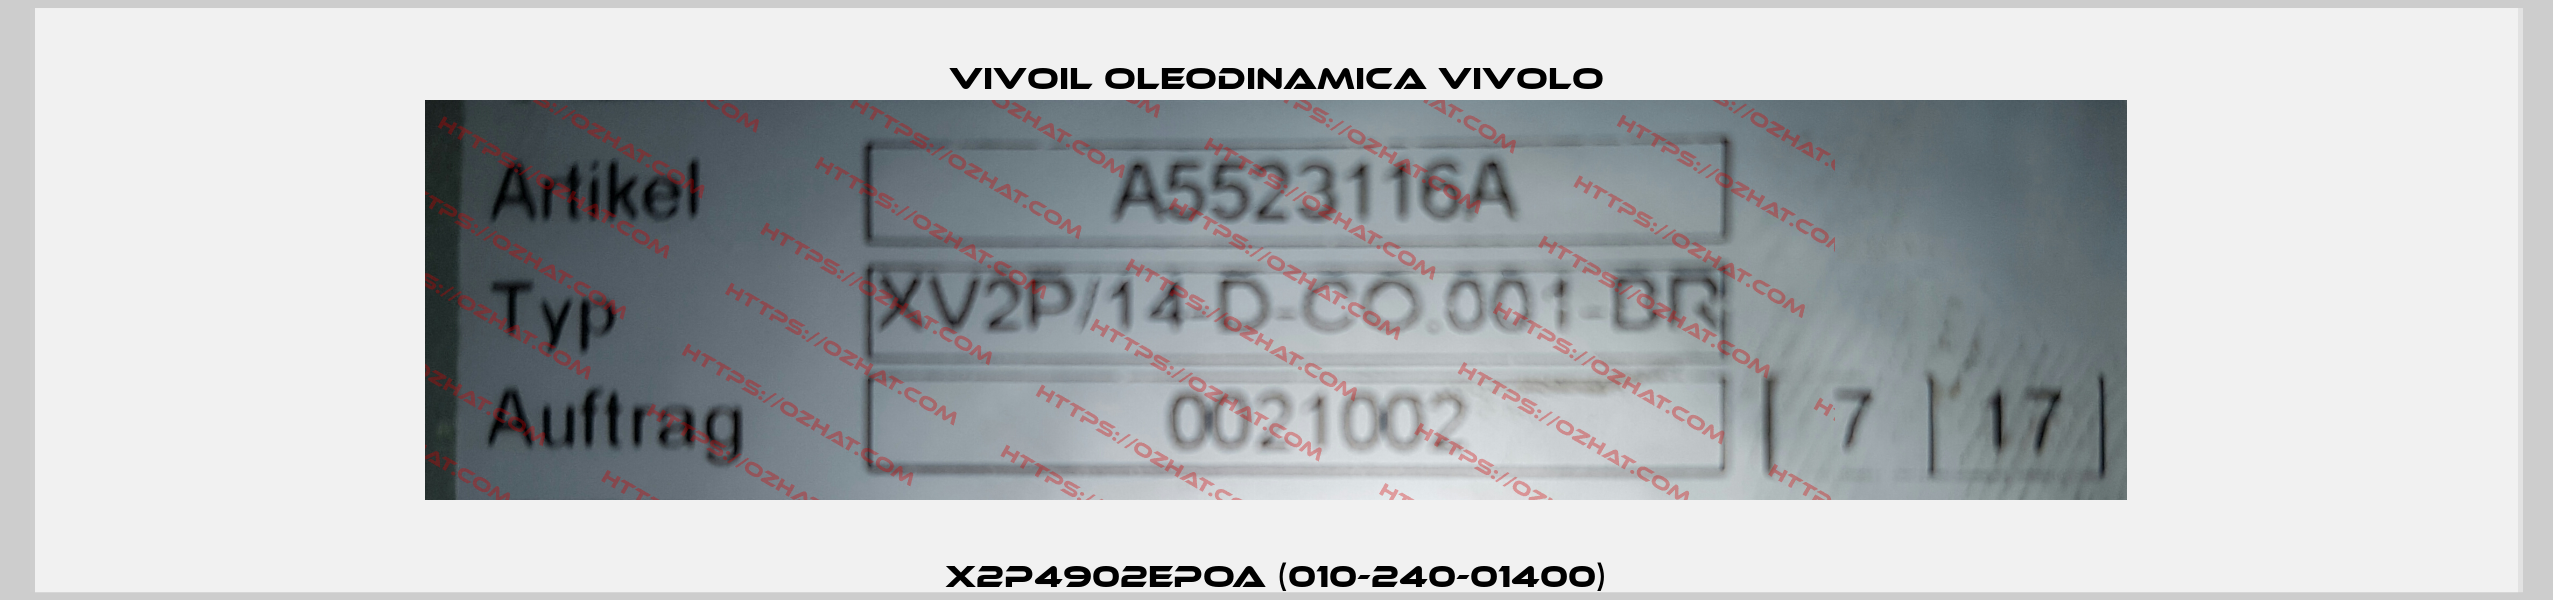 X2P4902EPOA (010-240-01400) Vivoil Oleodinamica Vivolo